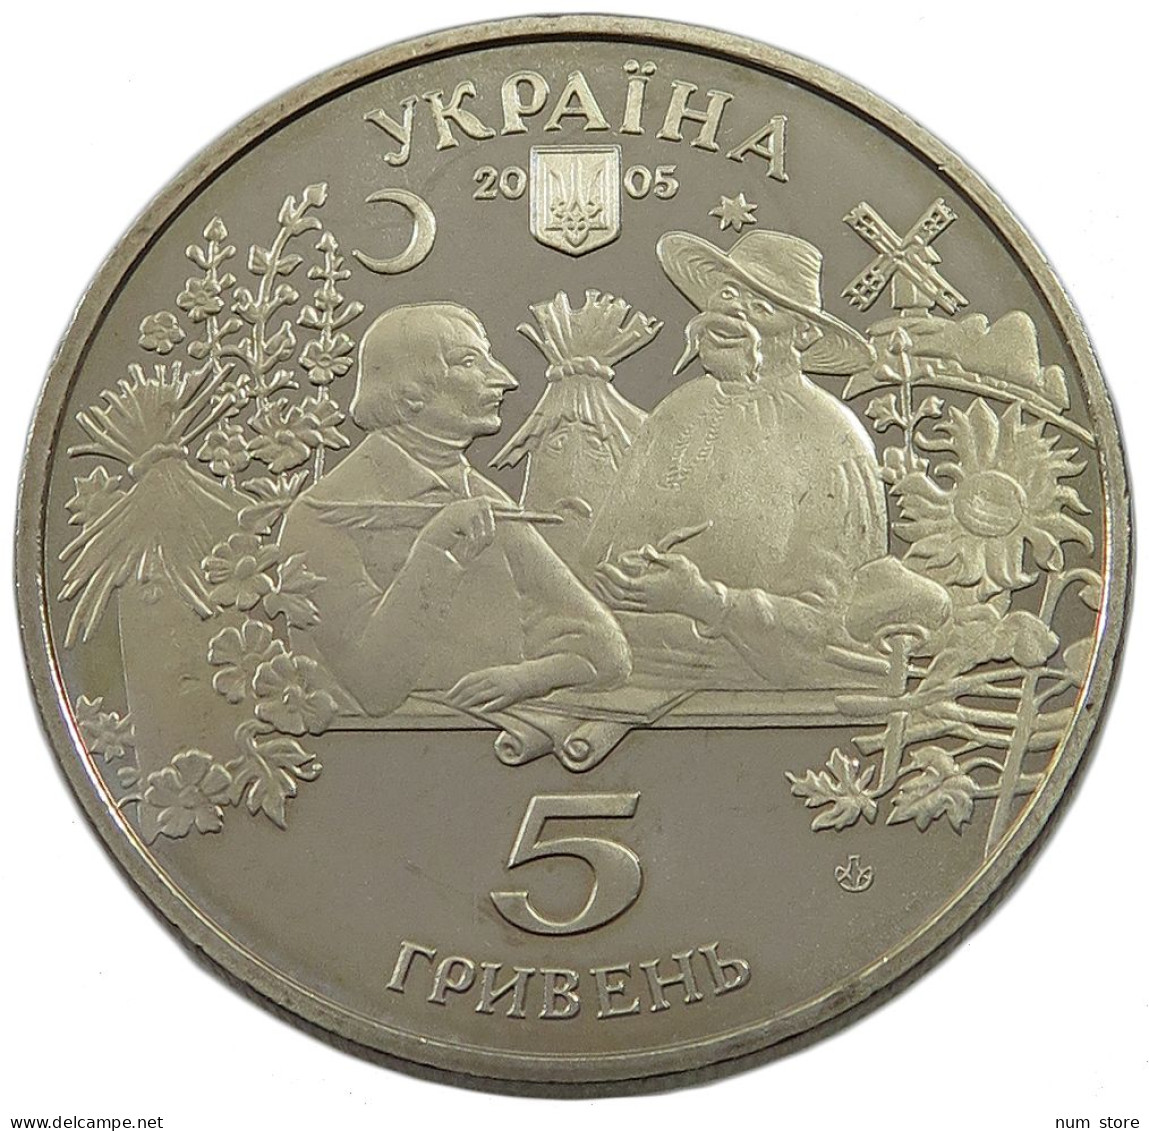 UKRAINE 5 HRYVEN 2005  #w033 0385 - Ukraine